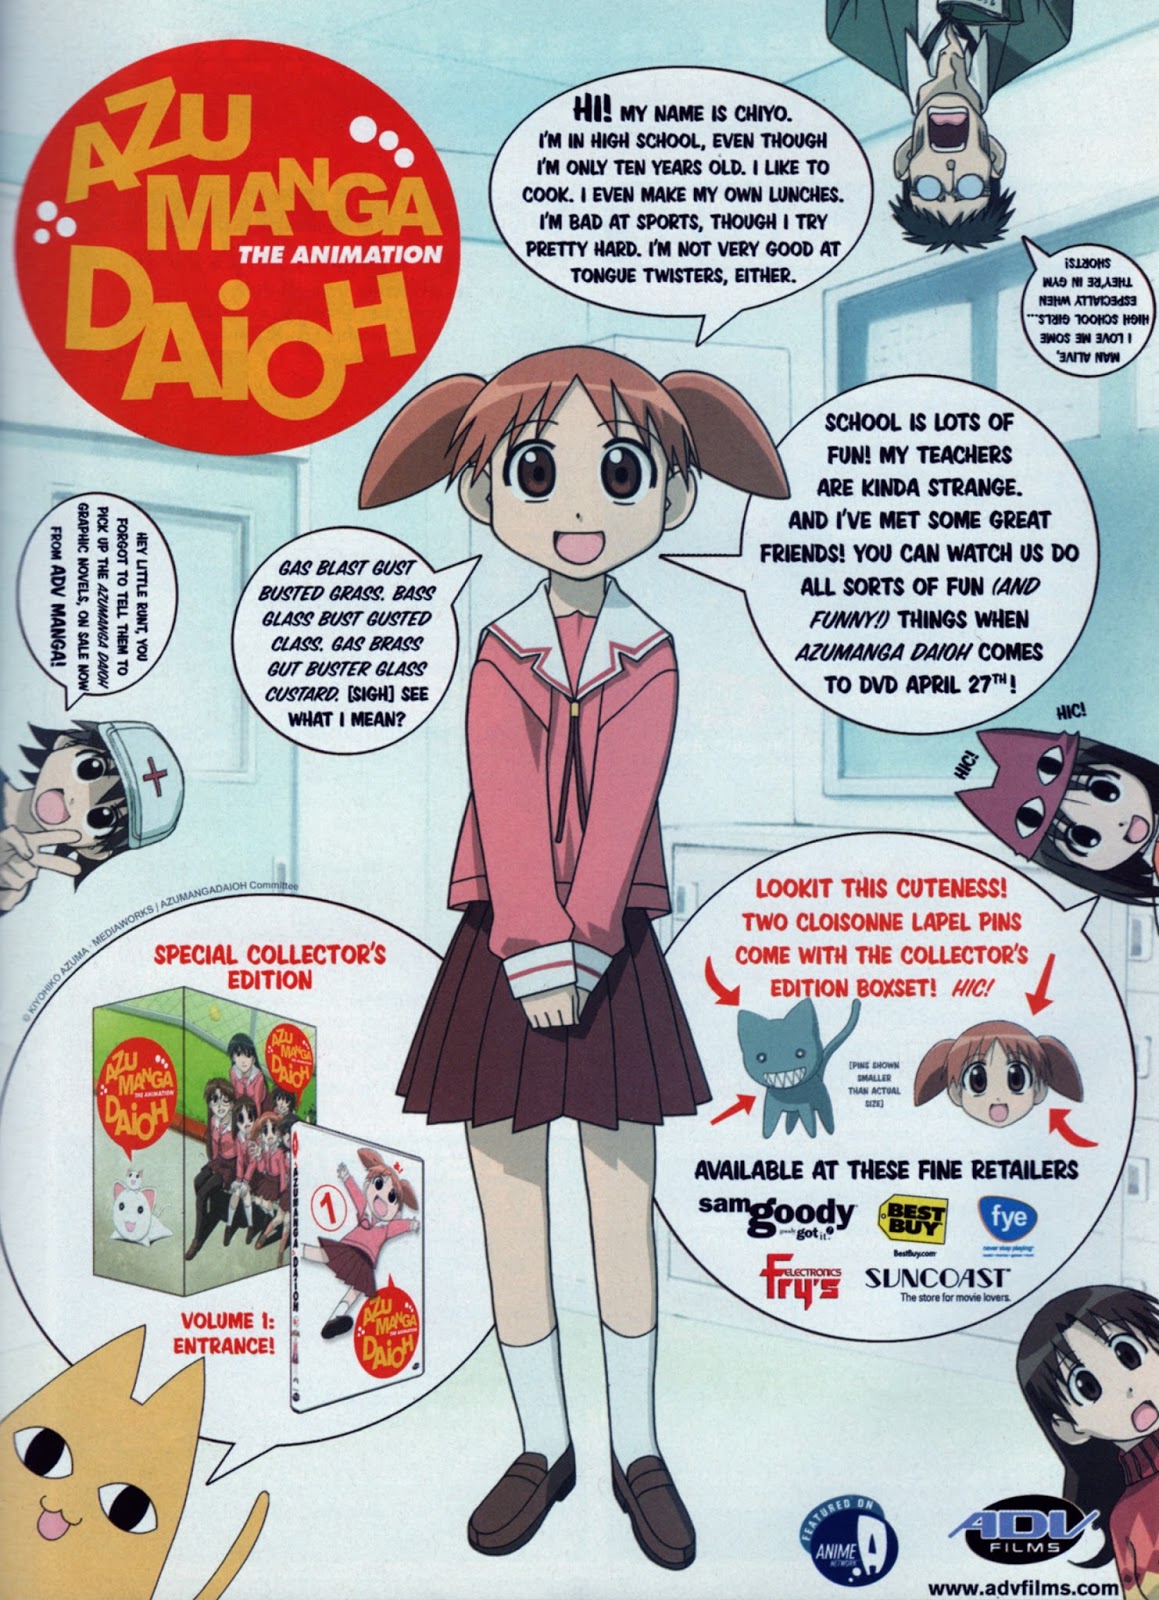 Azumanga Daioh Complete Series Episodes 1-26 Dual Audio English/Japanese